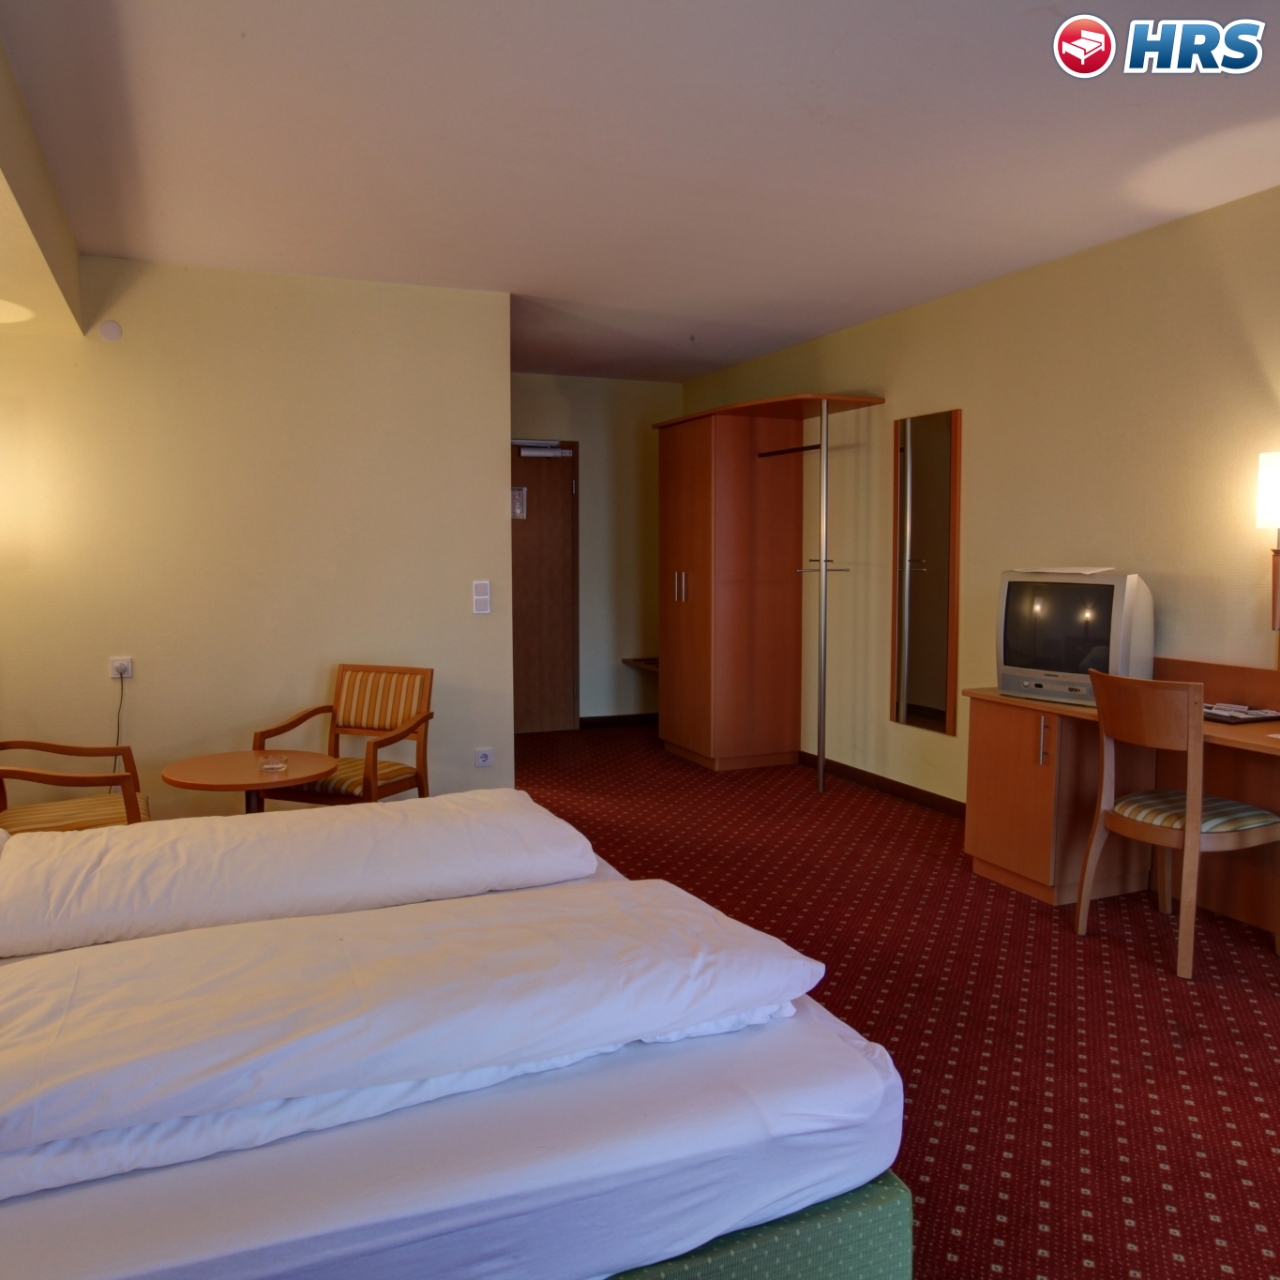 Hotel Residence - 3 HRS star hotel in Hanau (Hesse)